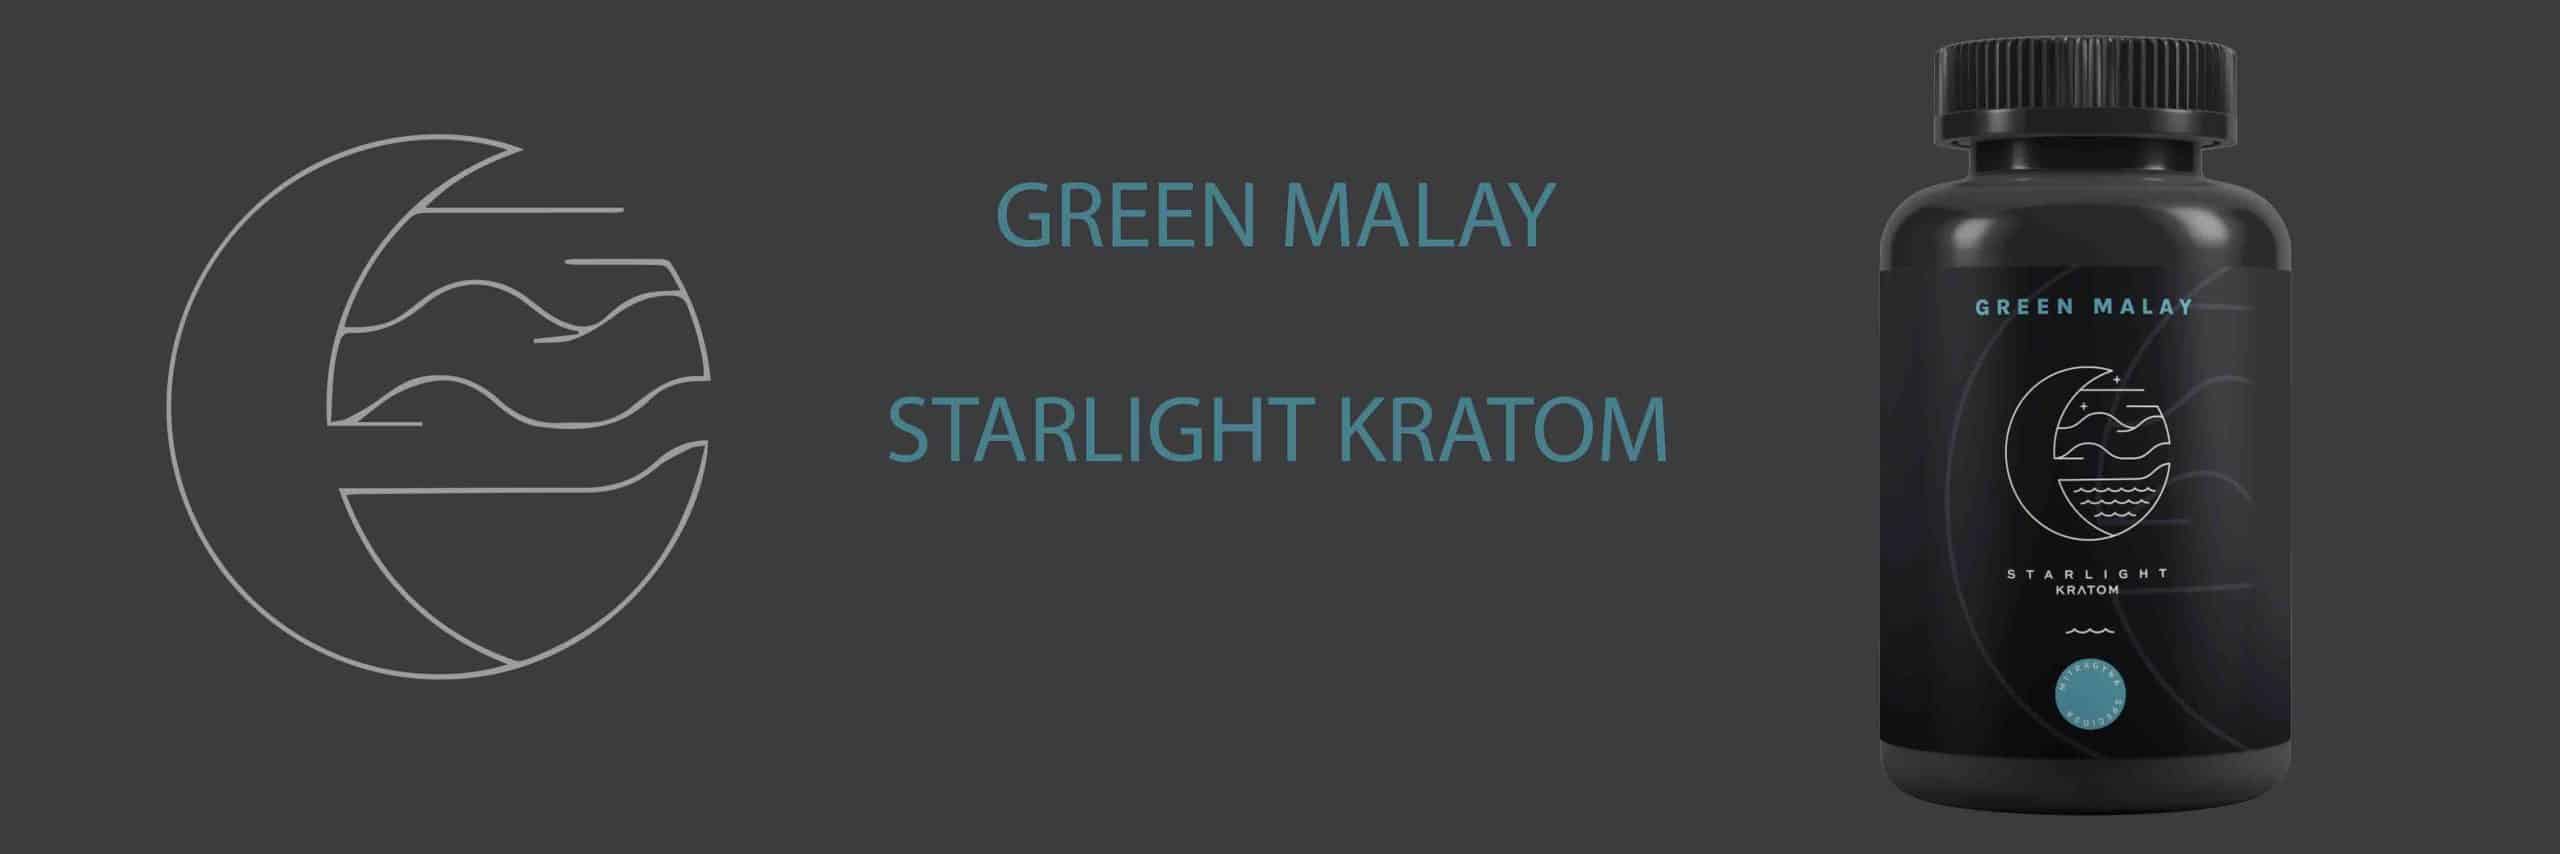 image-of-green-malay-kratom-capsules